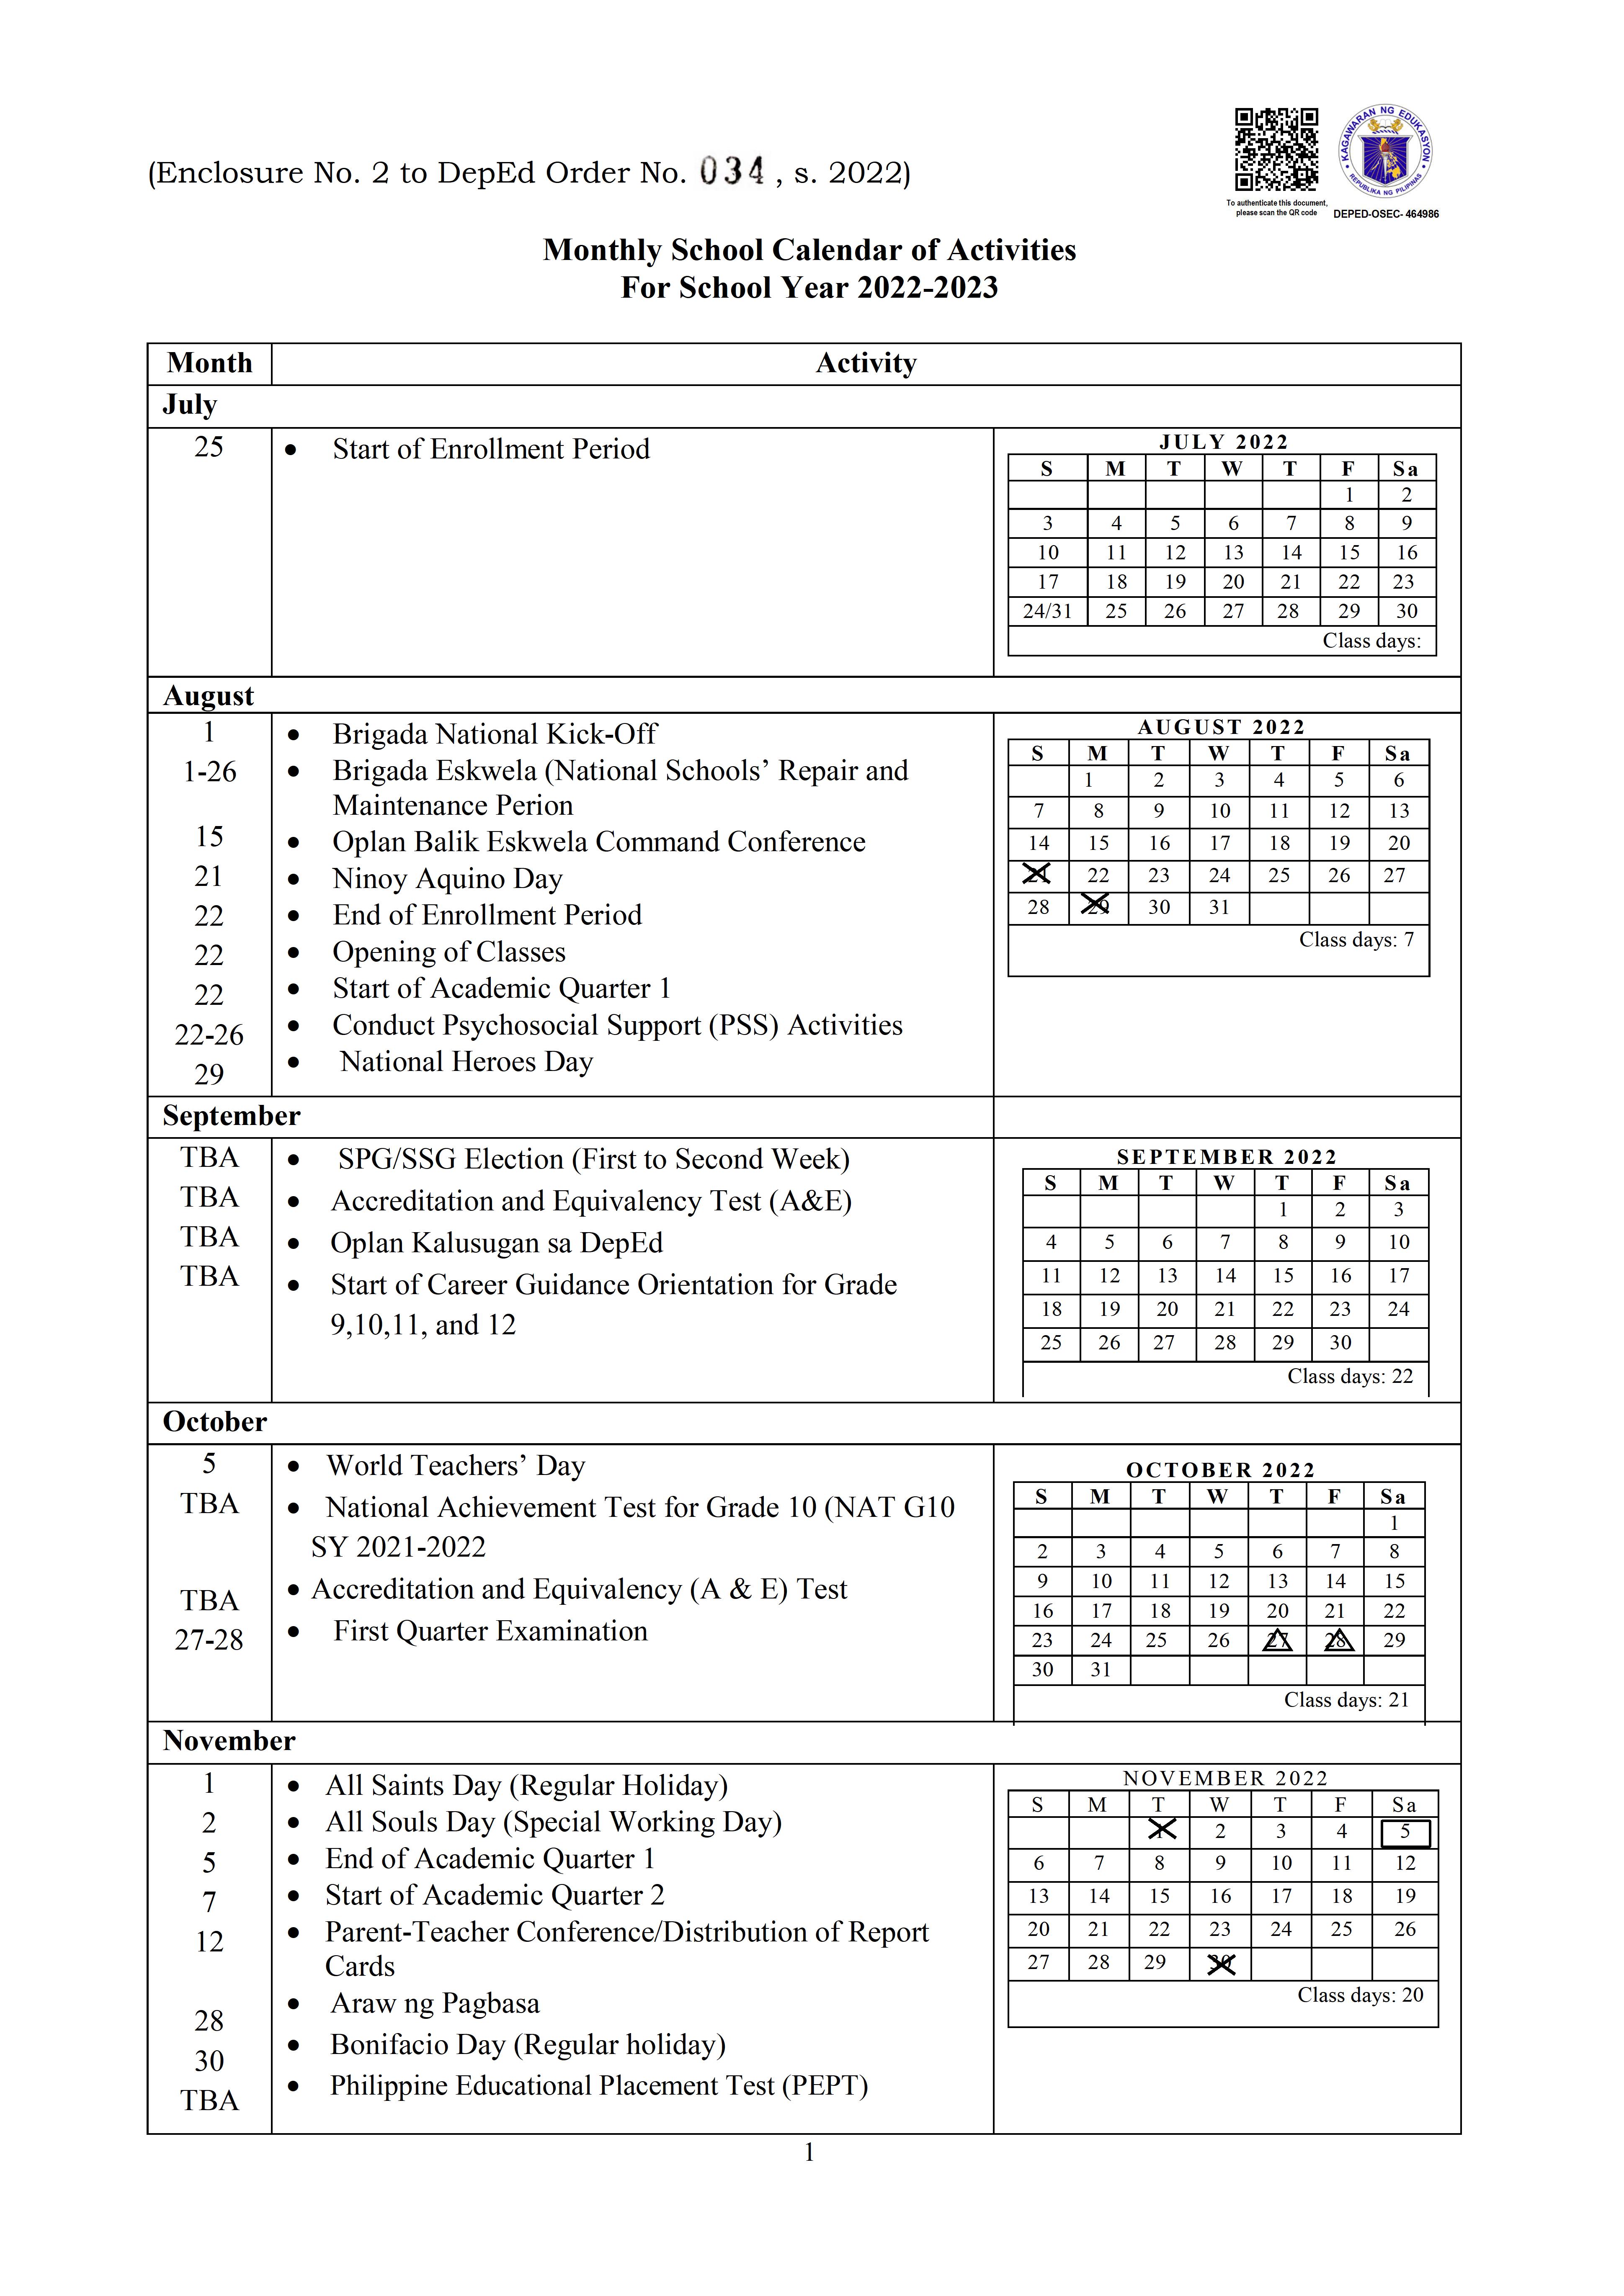 school-calendar-2022-2023-deped-order-no-34-s-2022-youtube-photos-unamed